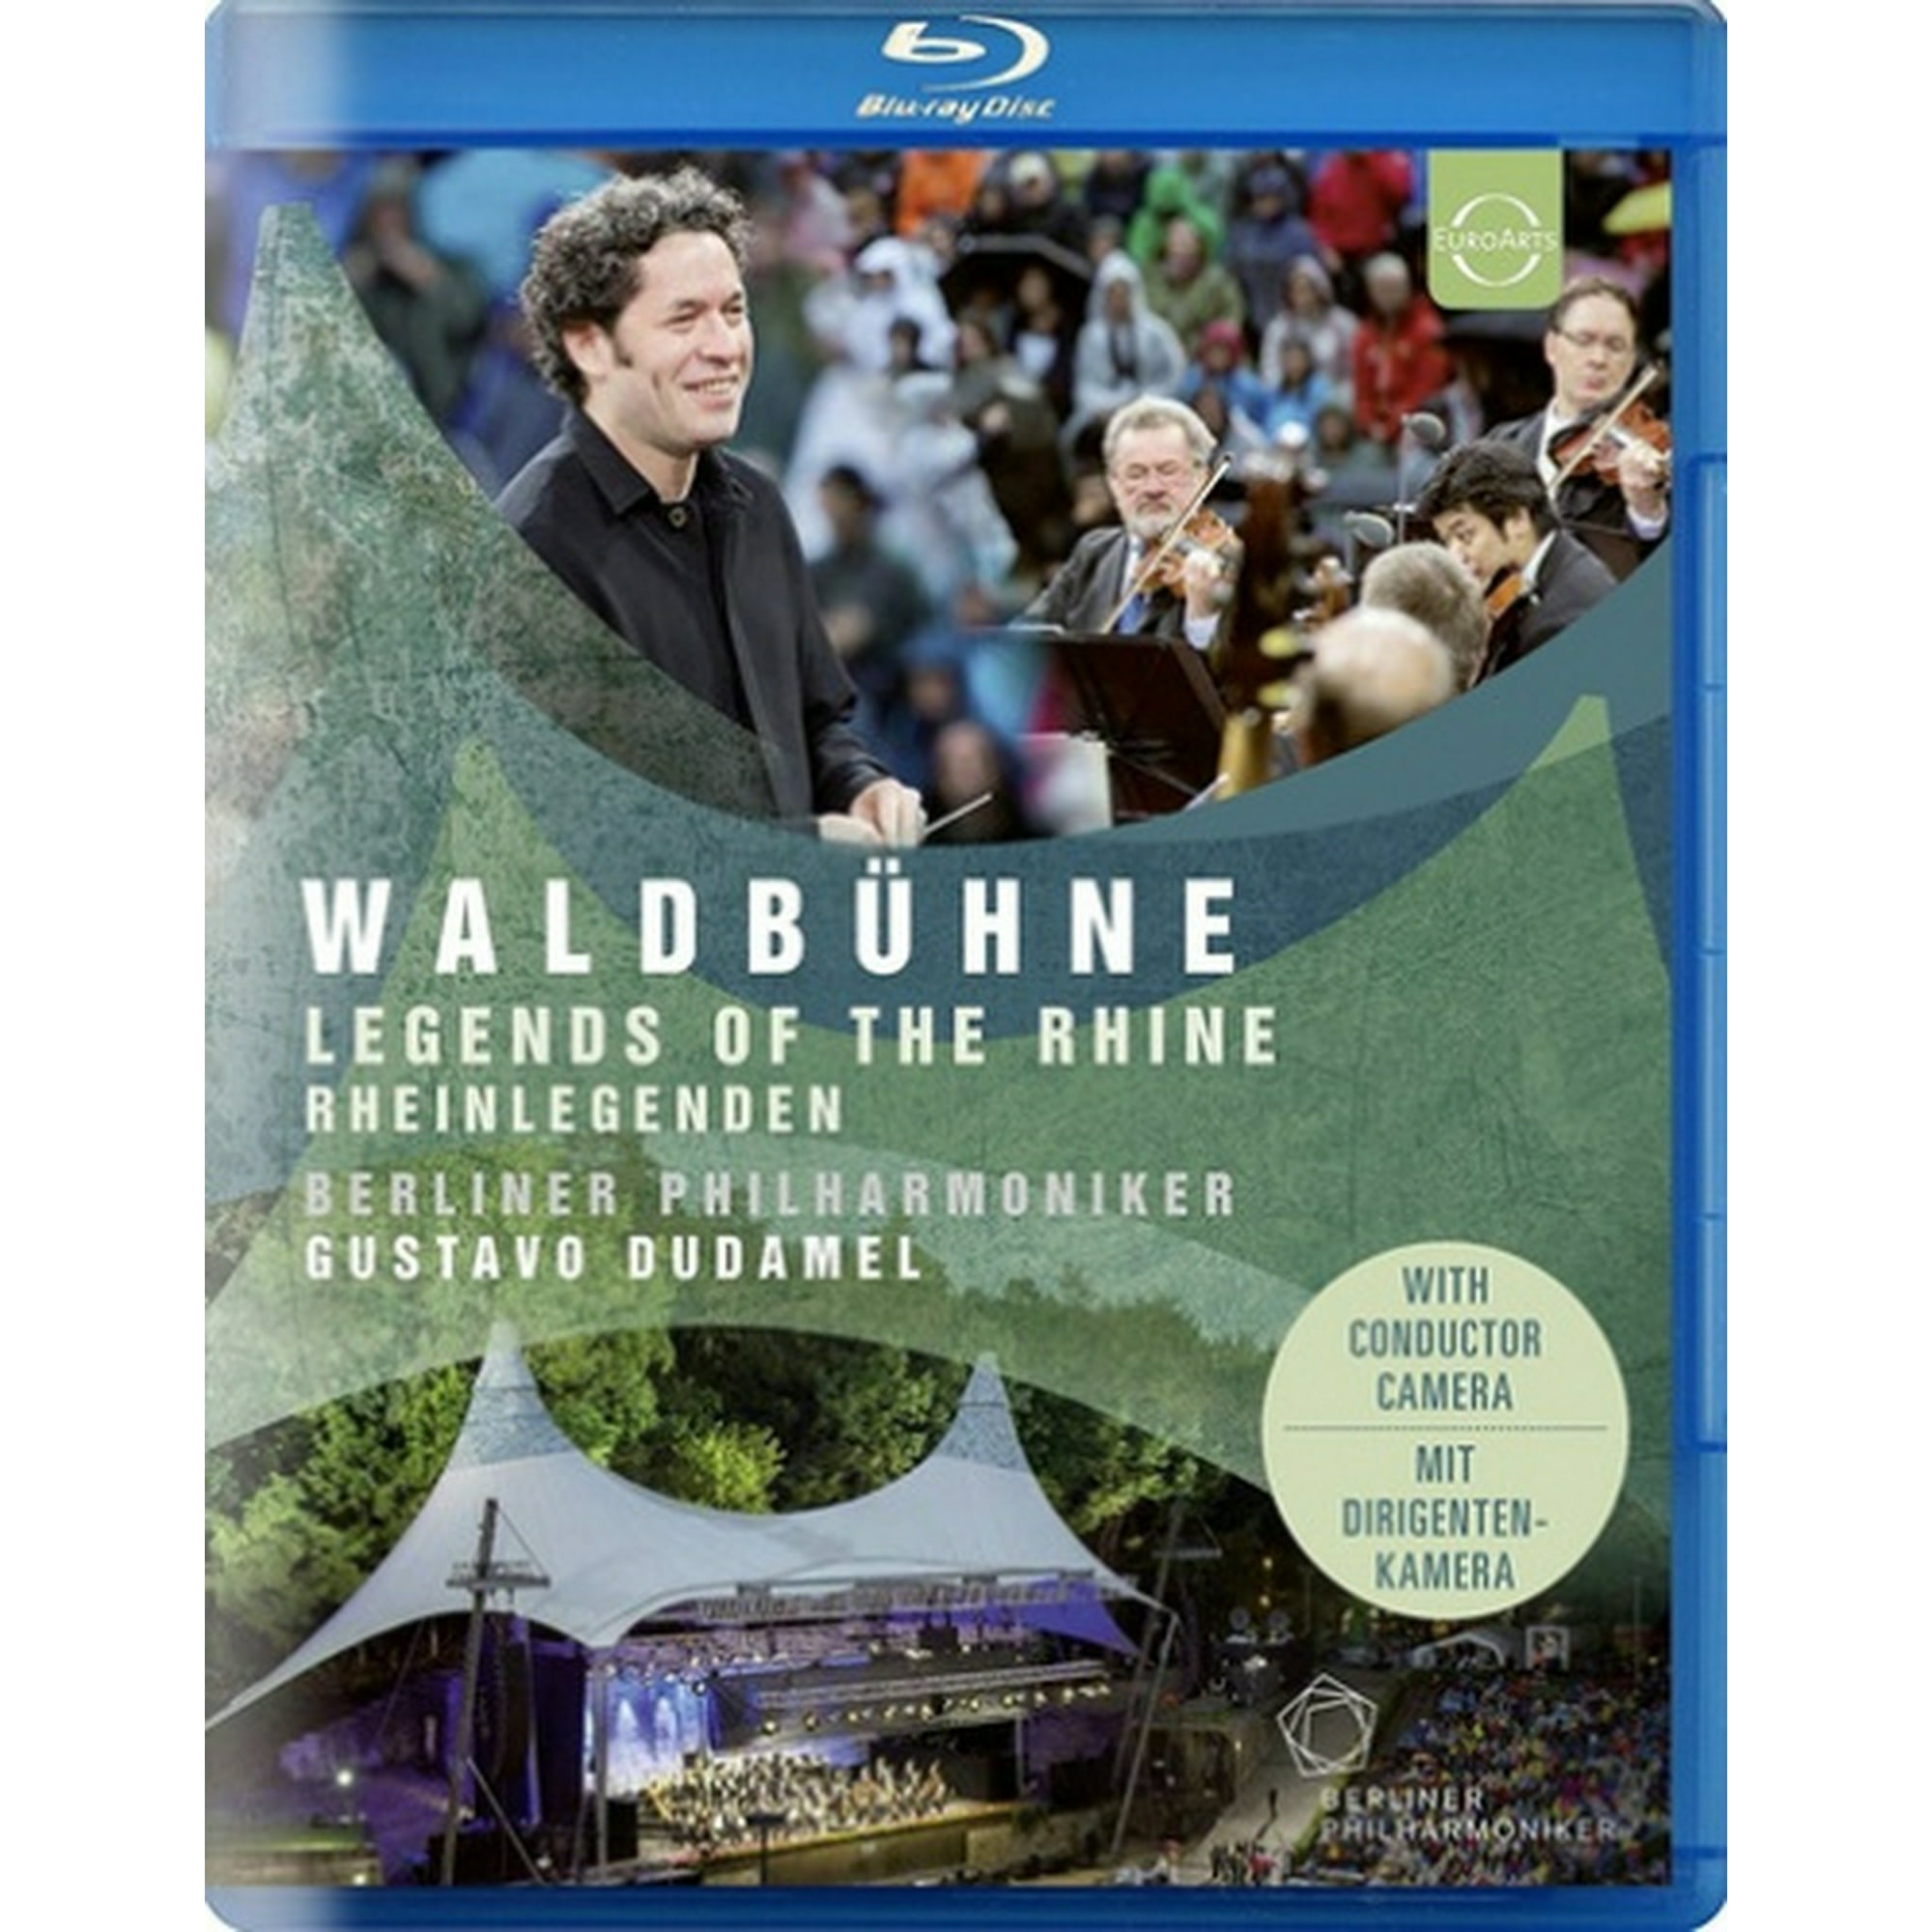 Berliner Philharmoniker - Waldbuehne 2017 - Open Air Berlin